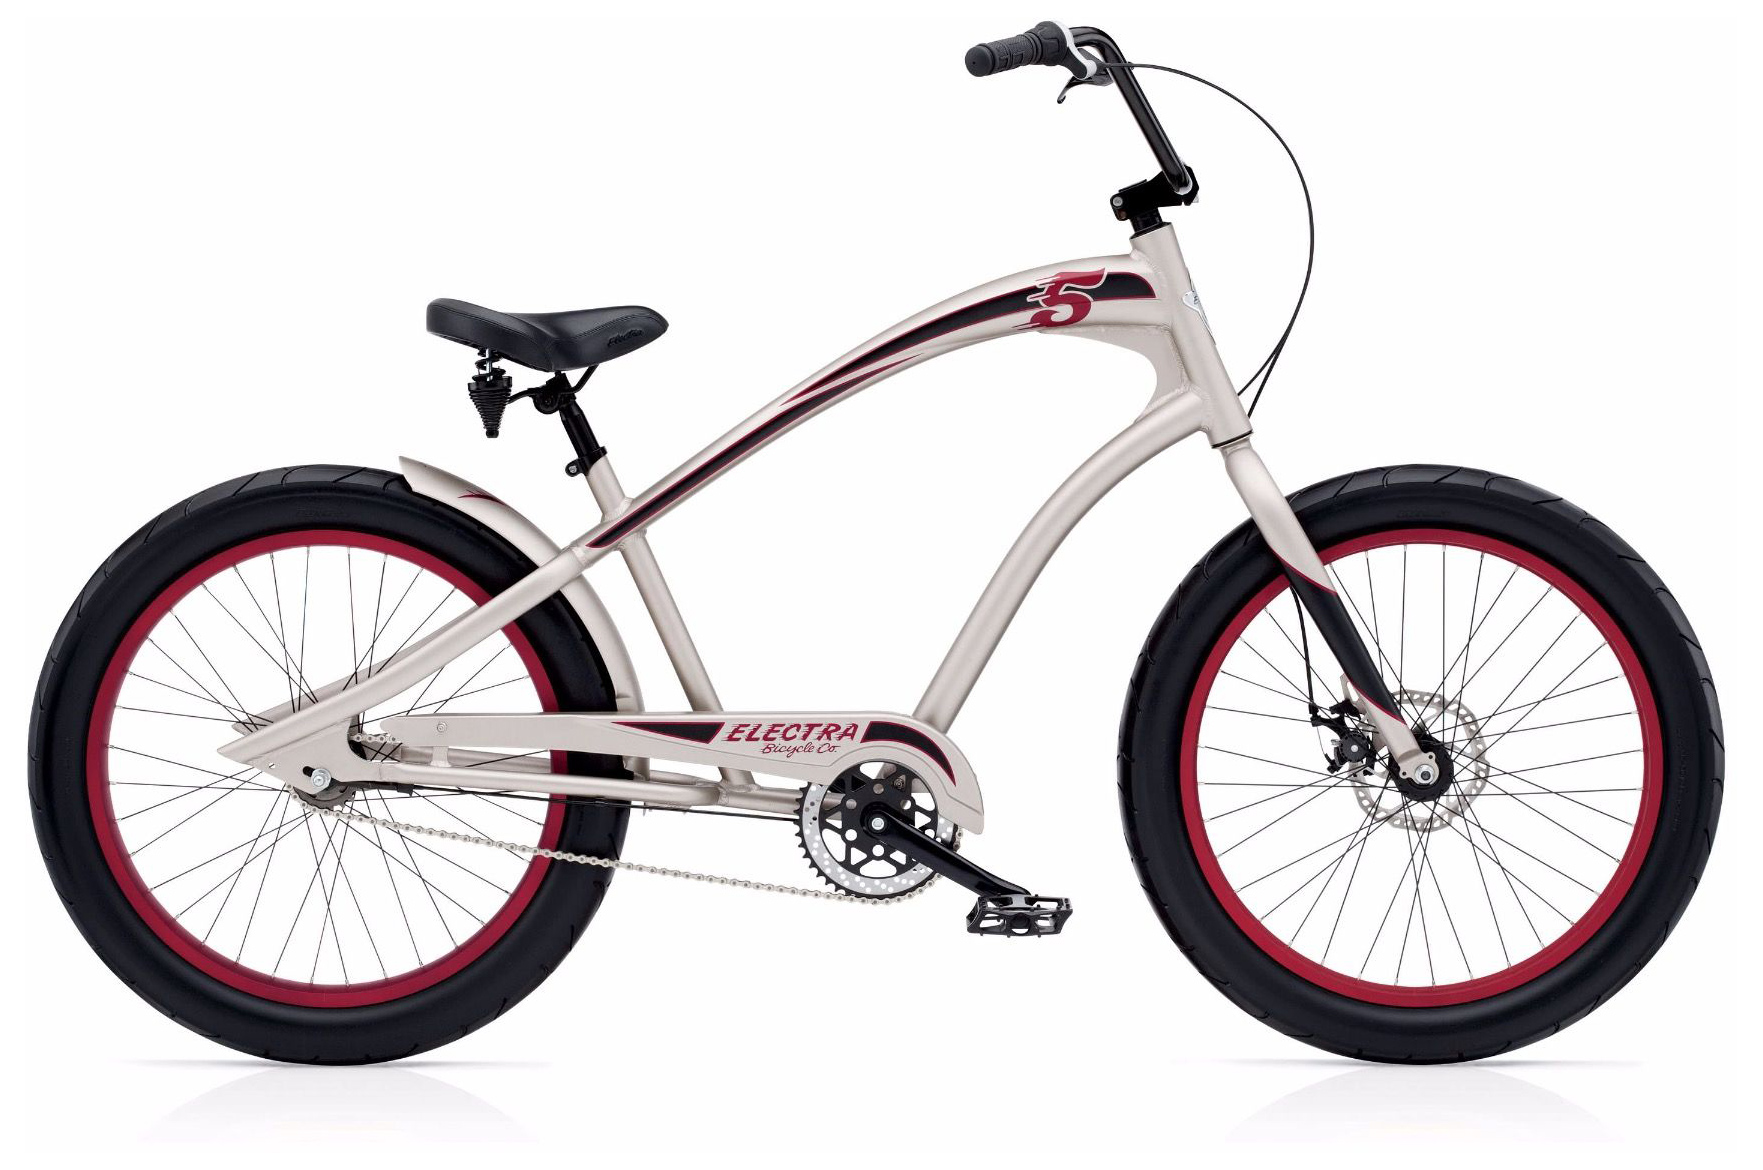  Велосипед Electra Fast 5 3i 2019